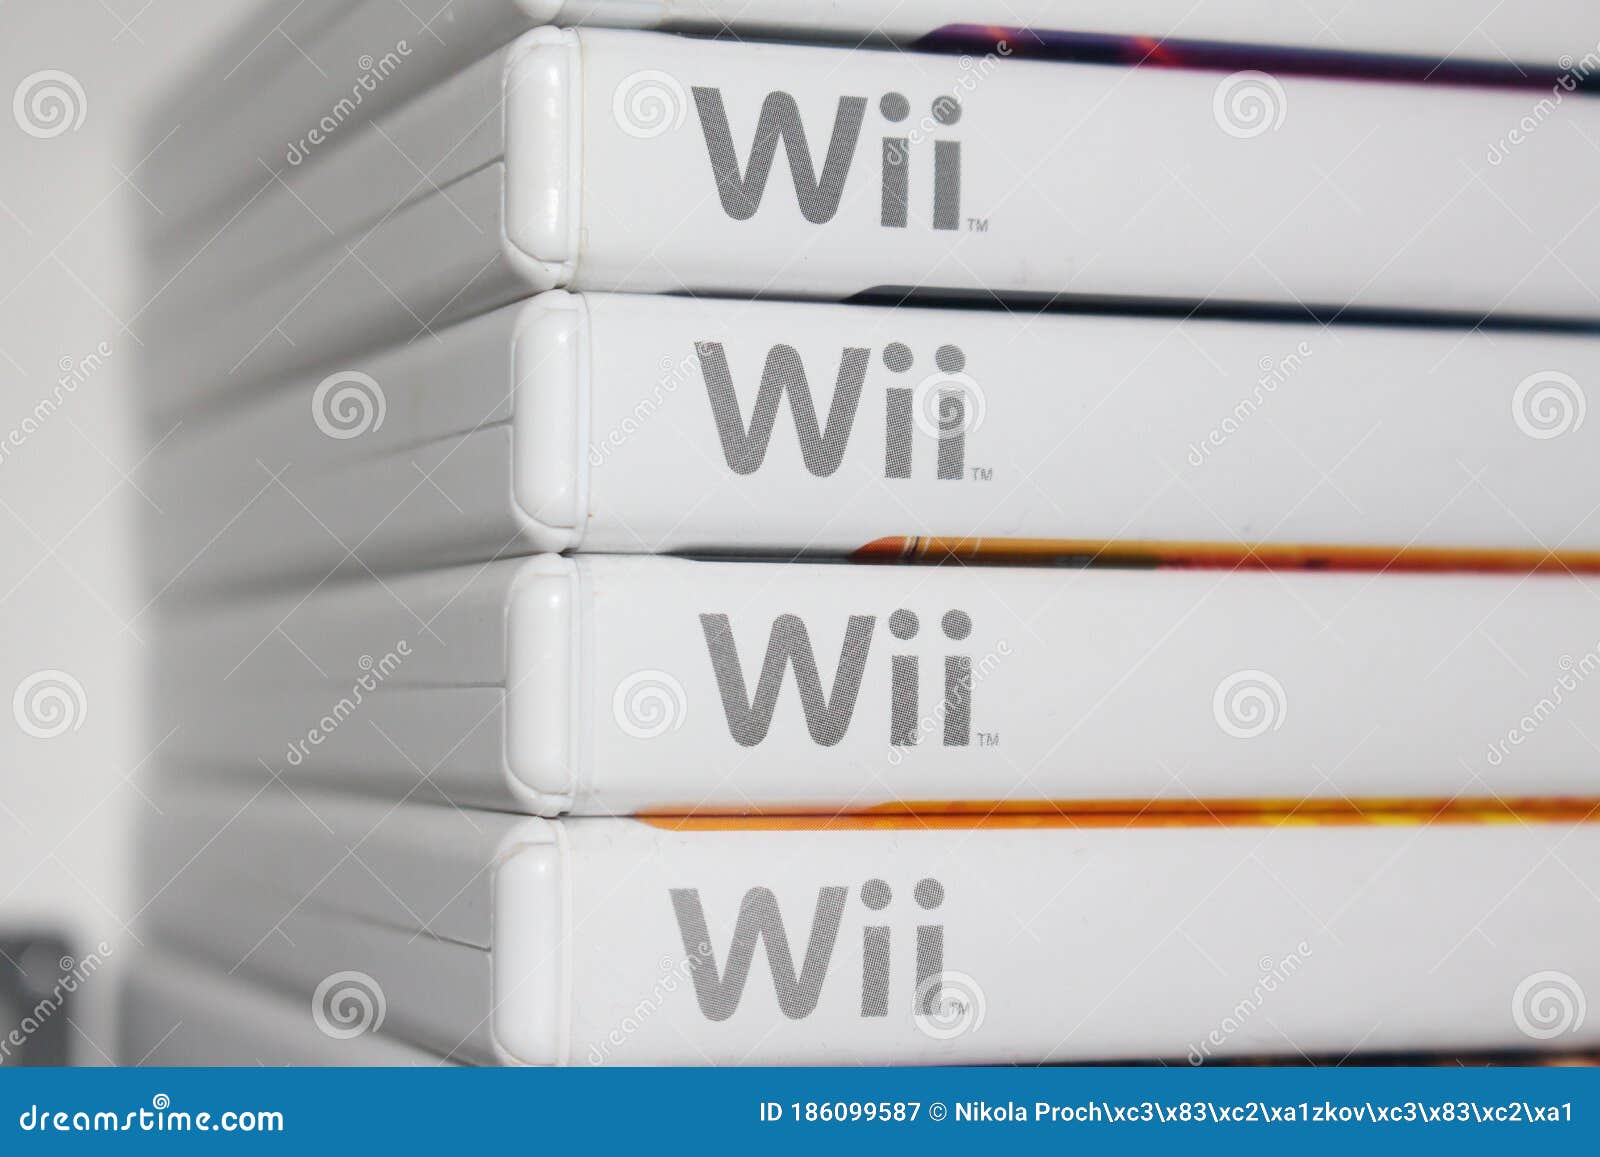 Nintendo Wii Games Editorial Photography Image Of Nintendo